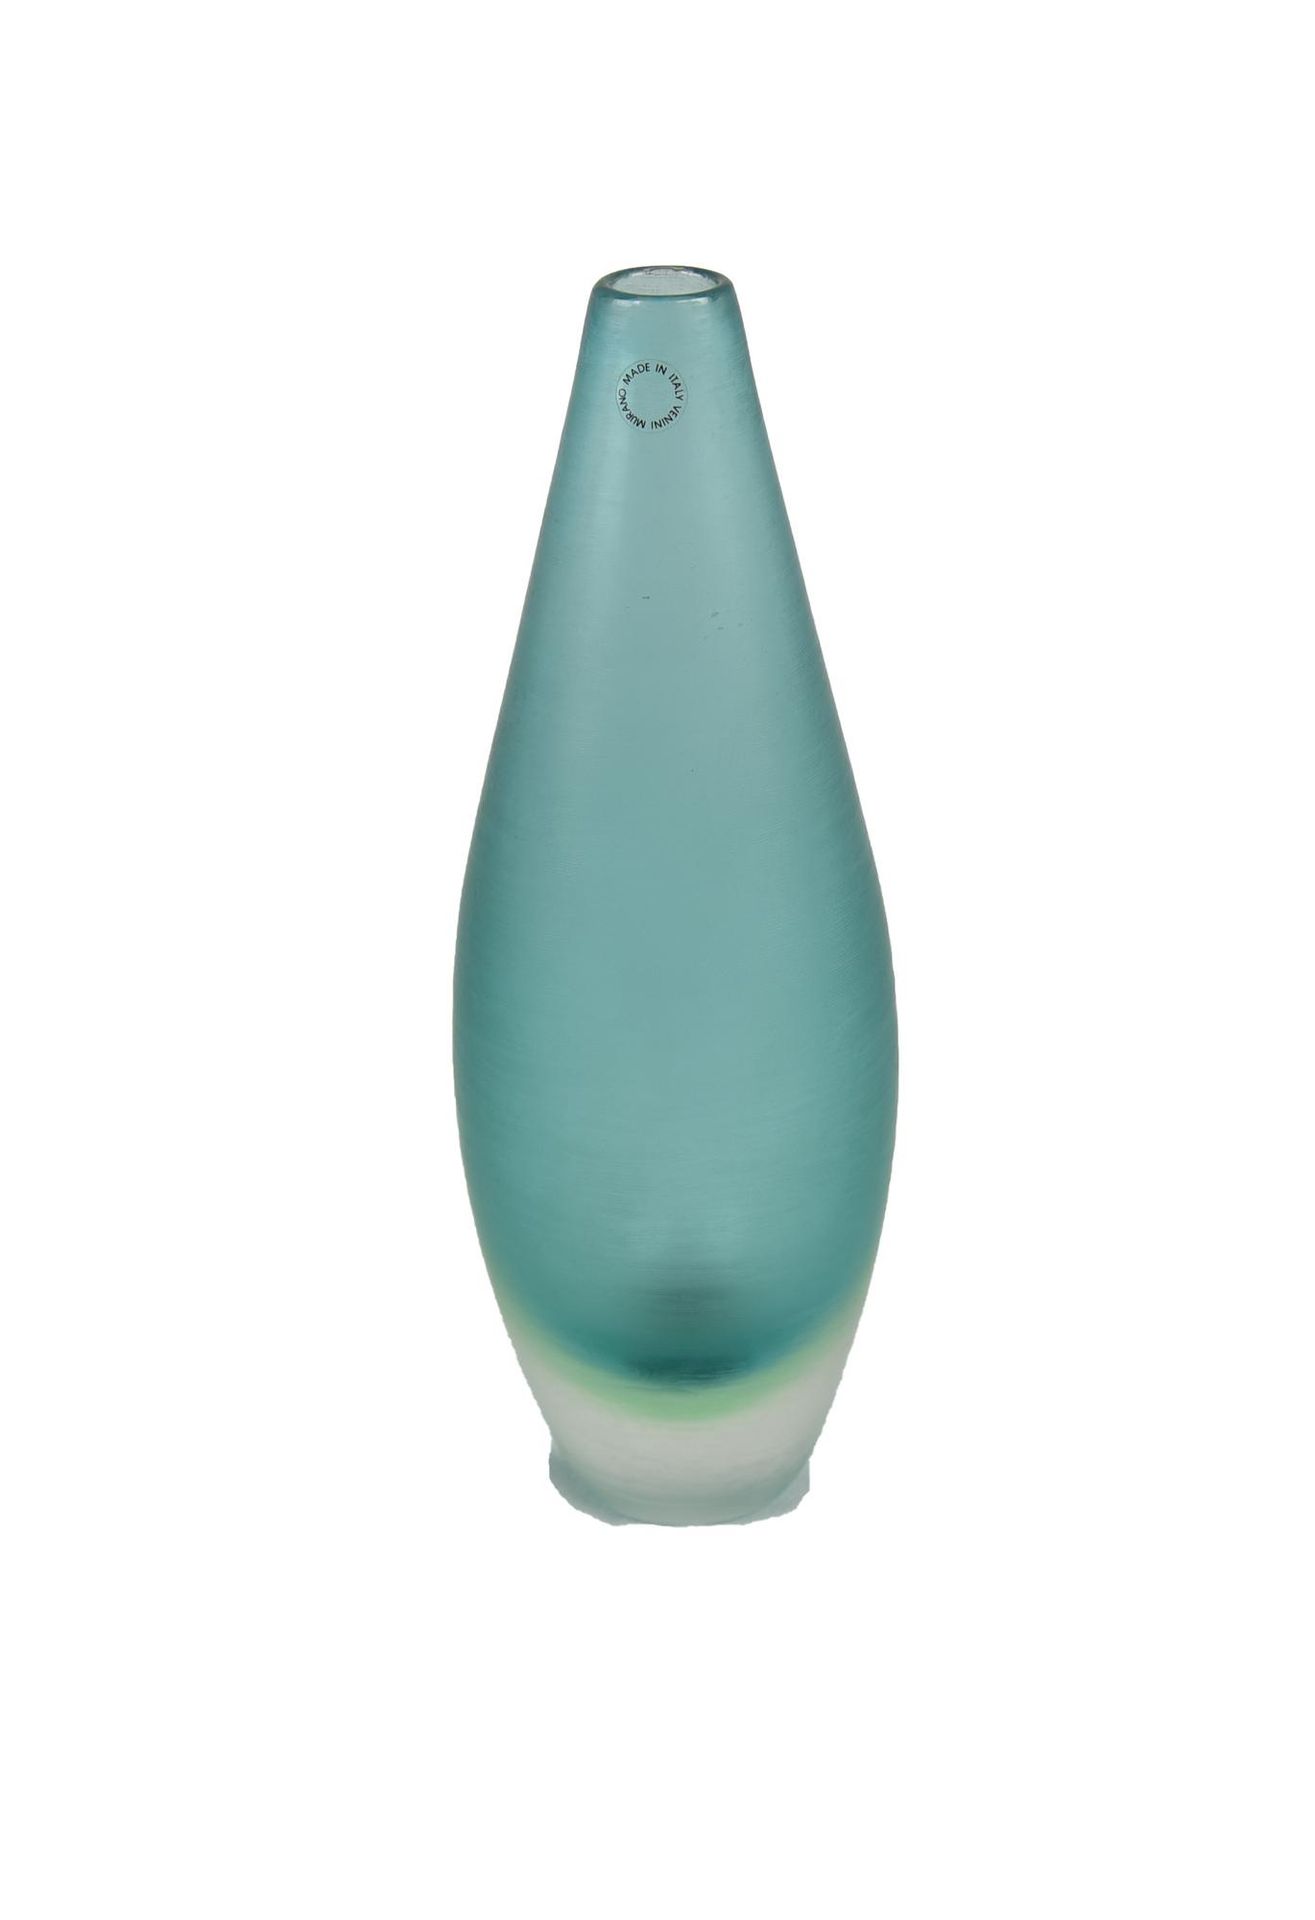 Venini, Murano 维尼尼，穆拉诺

金色花瓶

蚀刻玻璃，高30.5厘米

标签 威尼尼, 穆拉诺

底部：刻有 "Venini 1991/11"
&hellip;